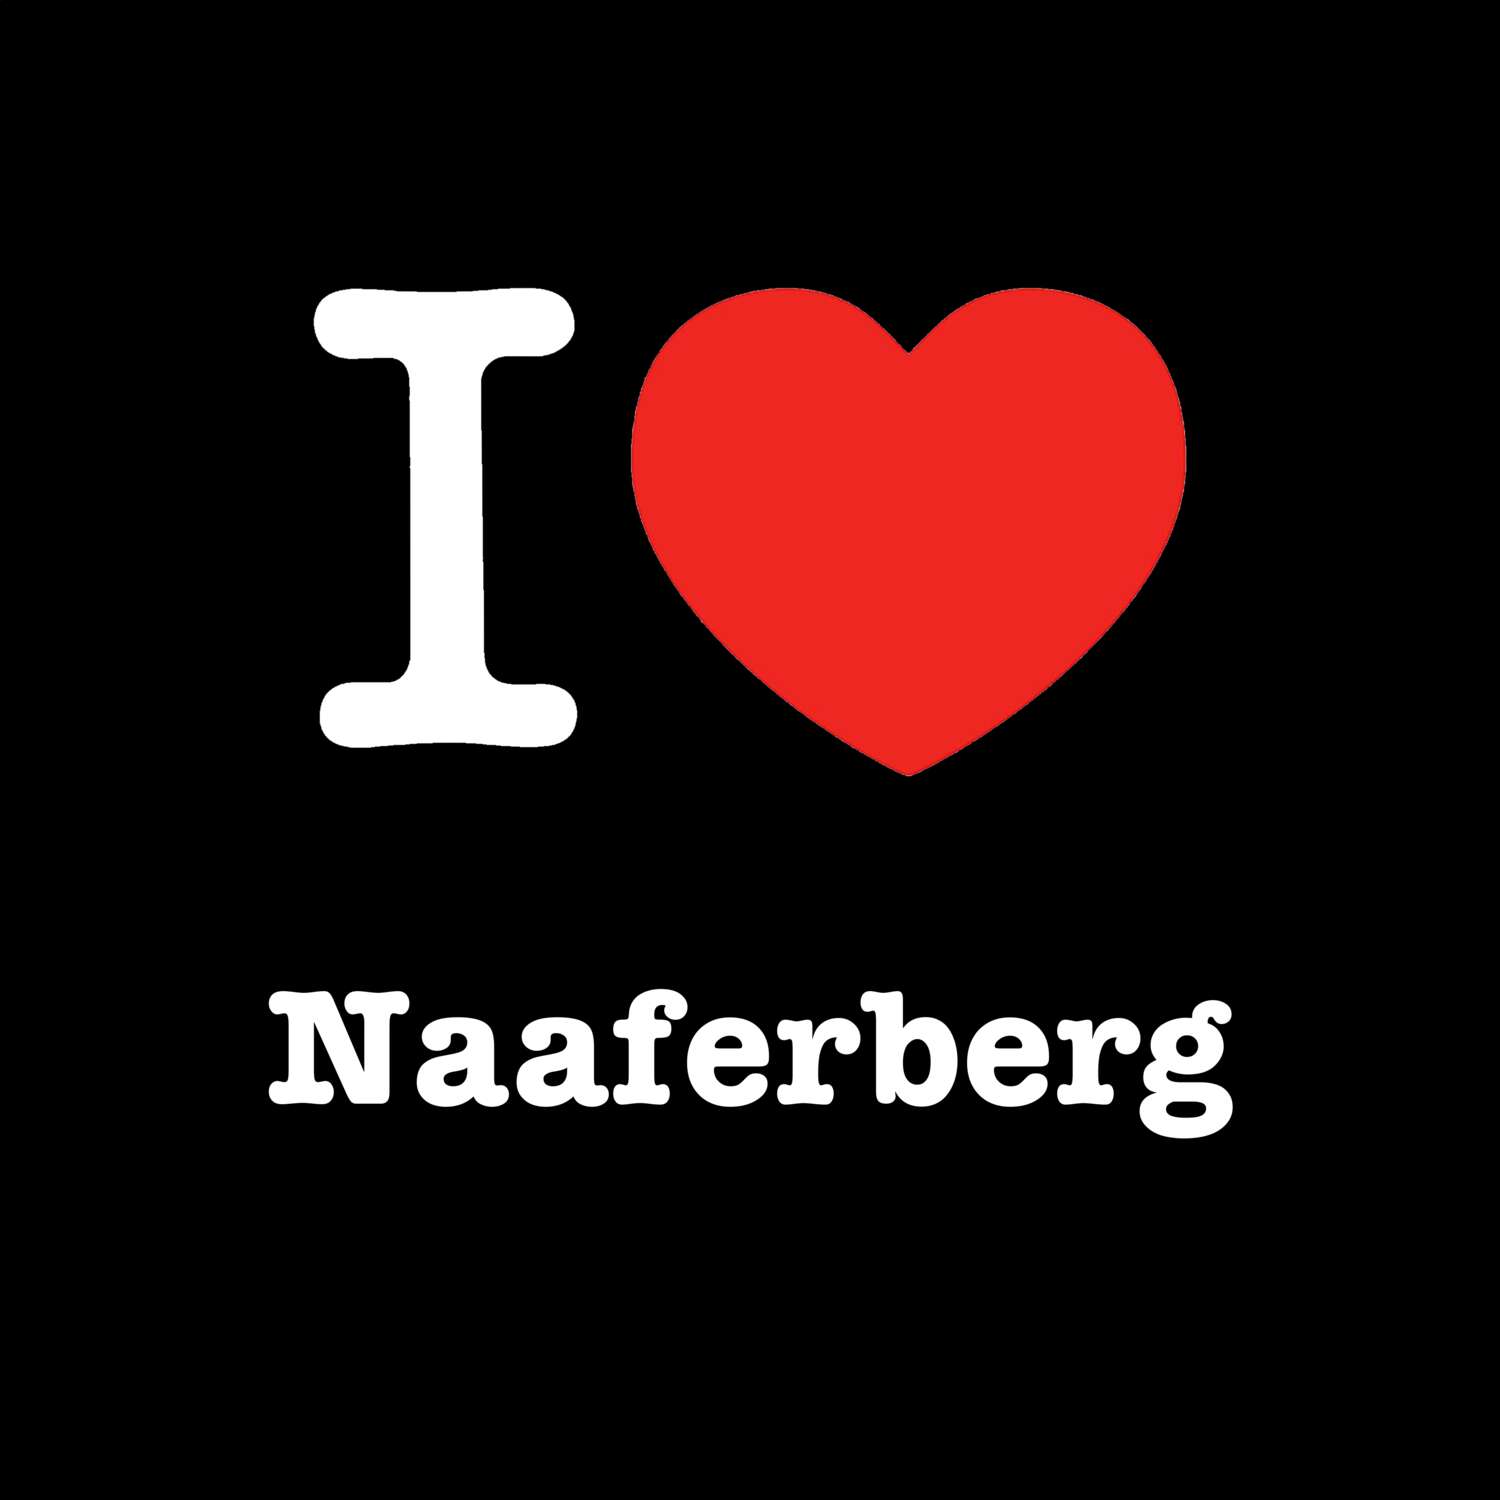 Naaferberg T-Shirt »I love«